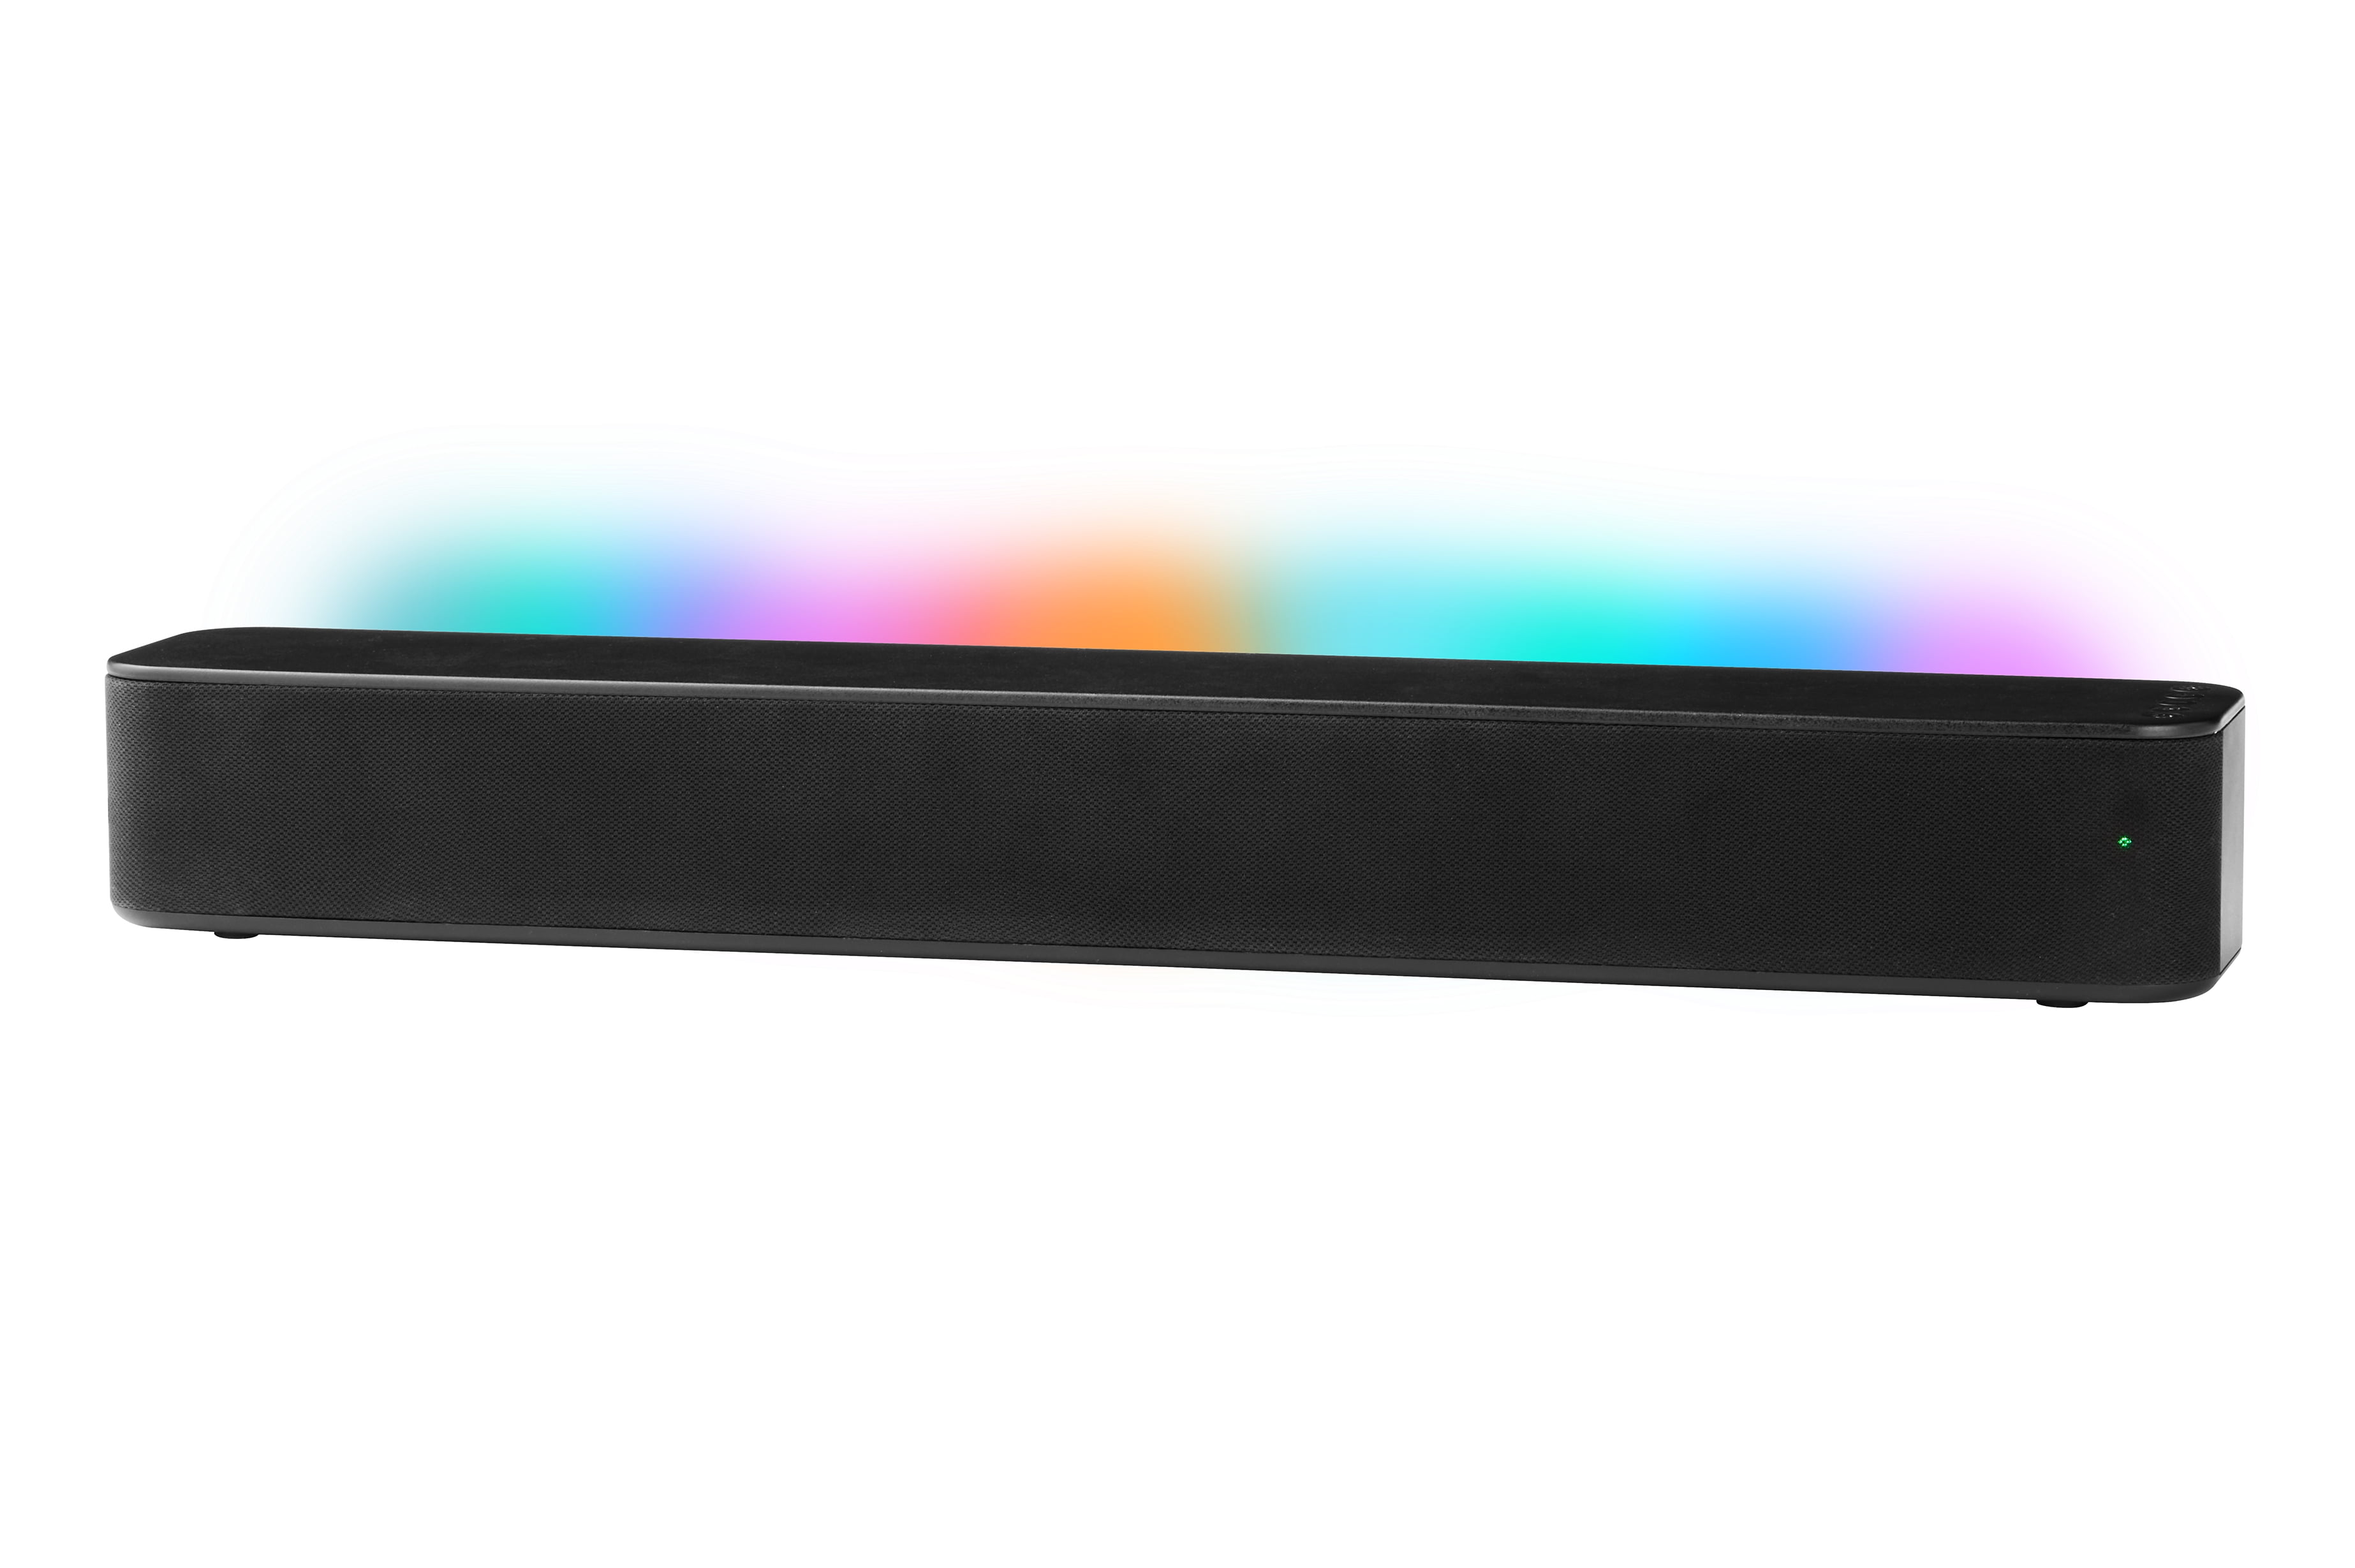 NEW - onn. 2.0 LED Soundbar with 2 Speakers, 20